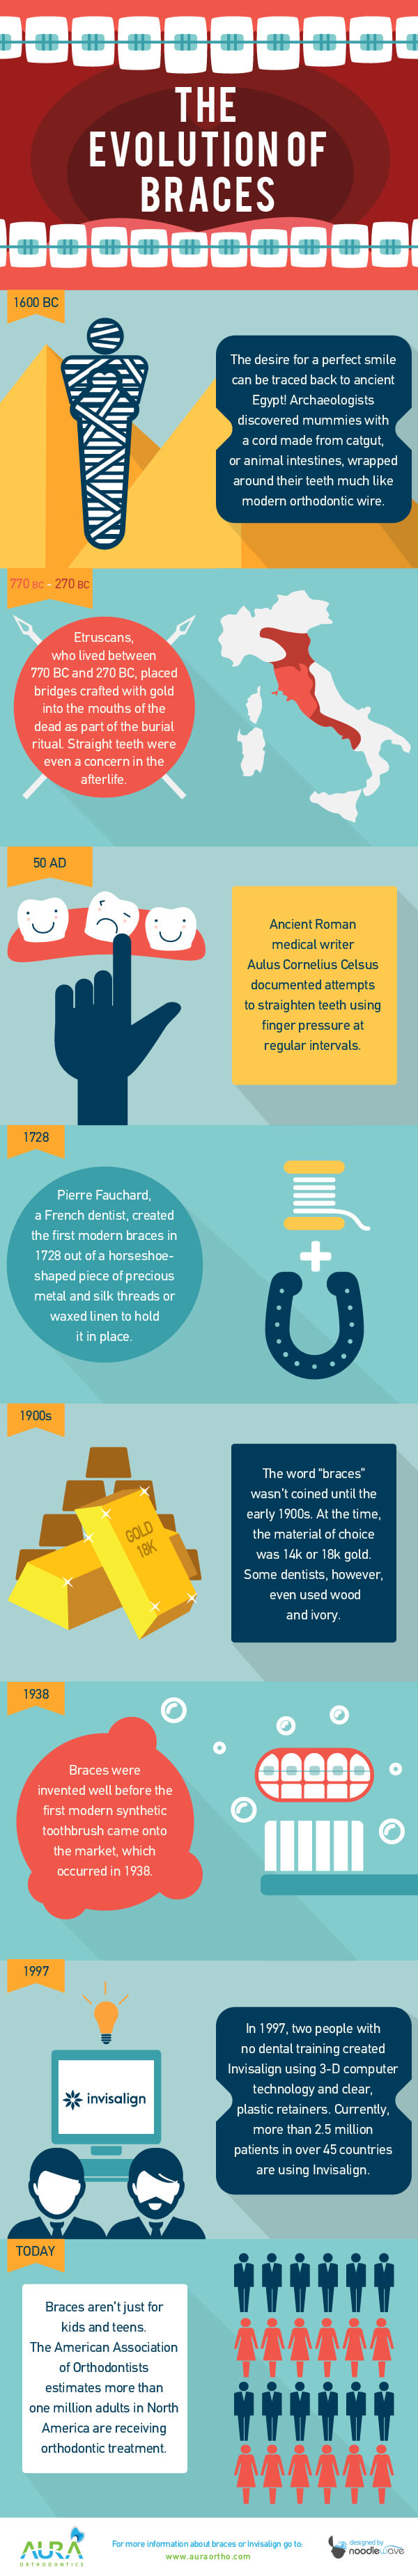 evolution of braces infographic 72dpi